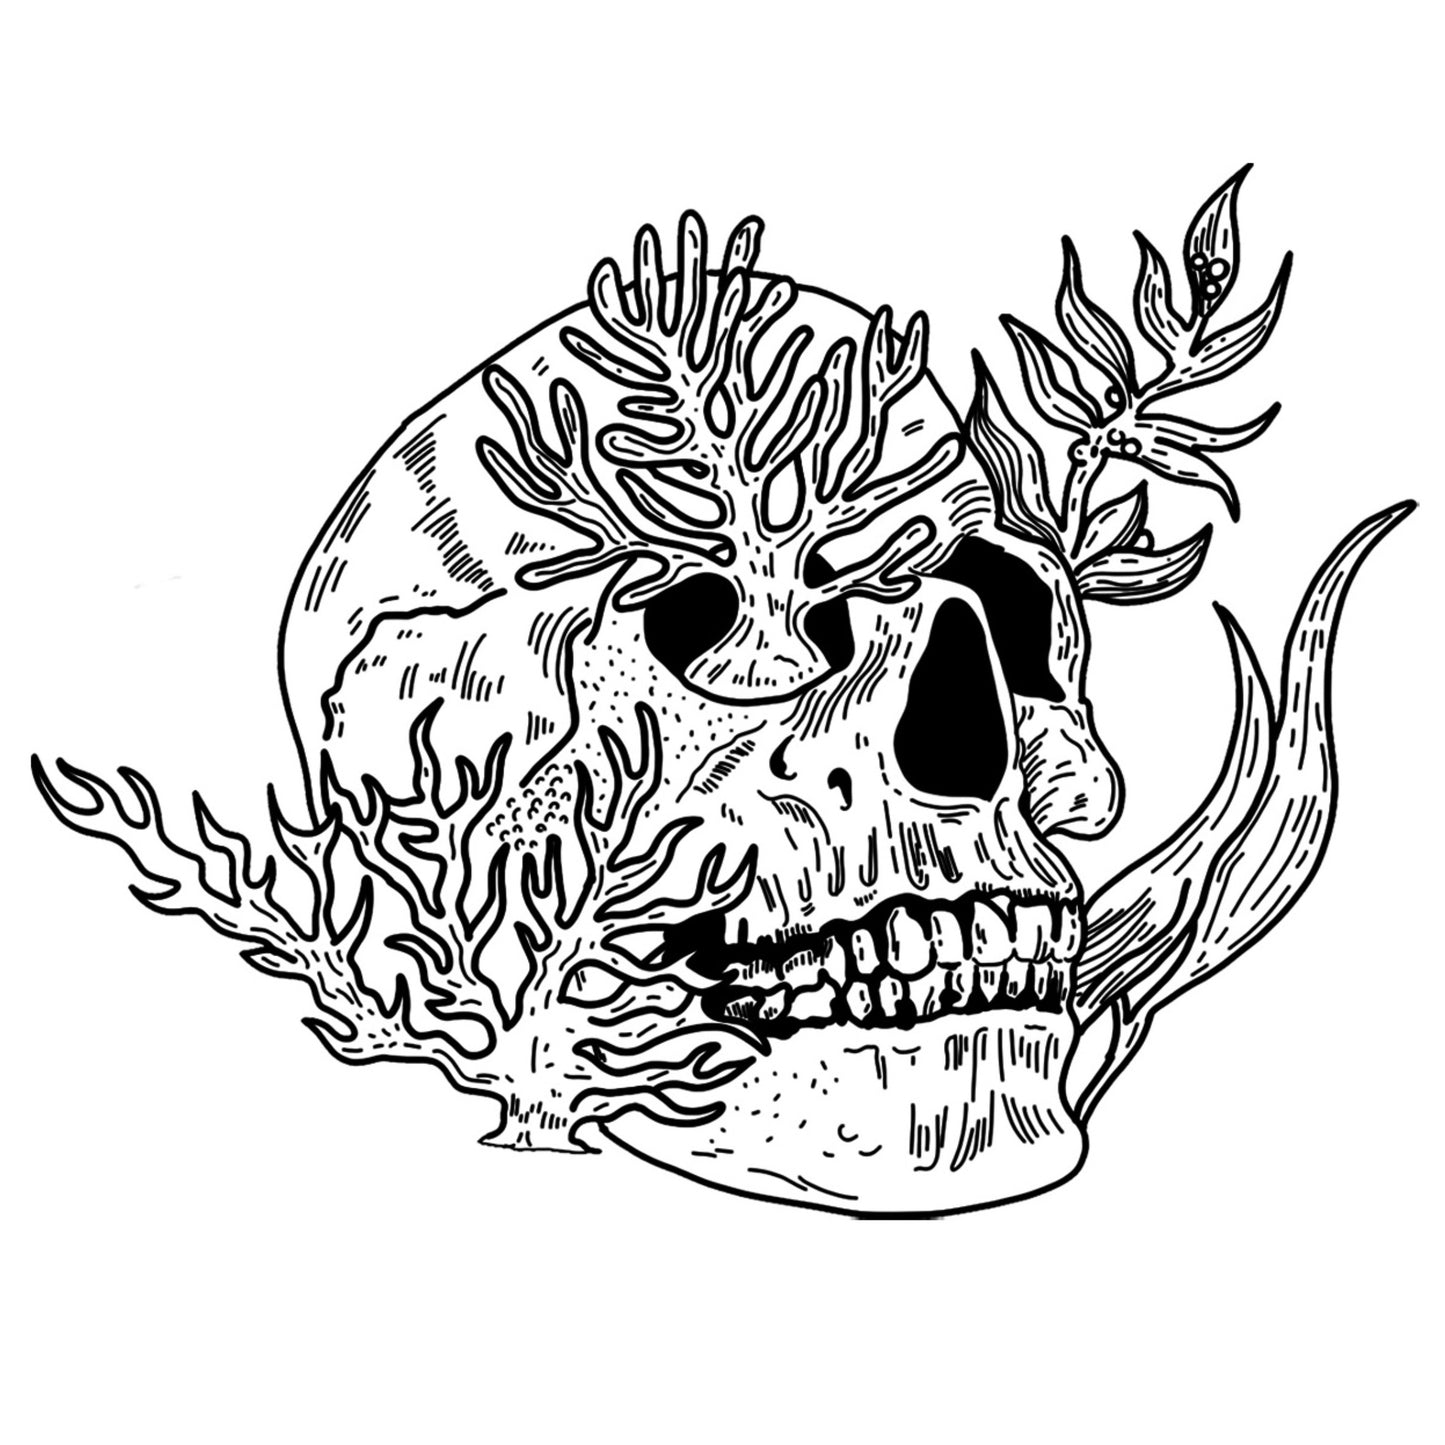 Seaweed Skull Sticker